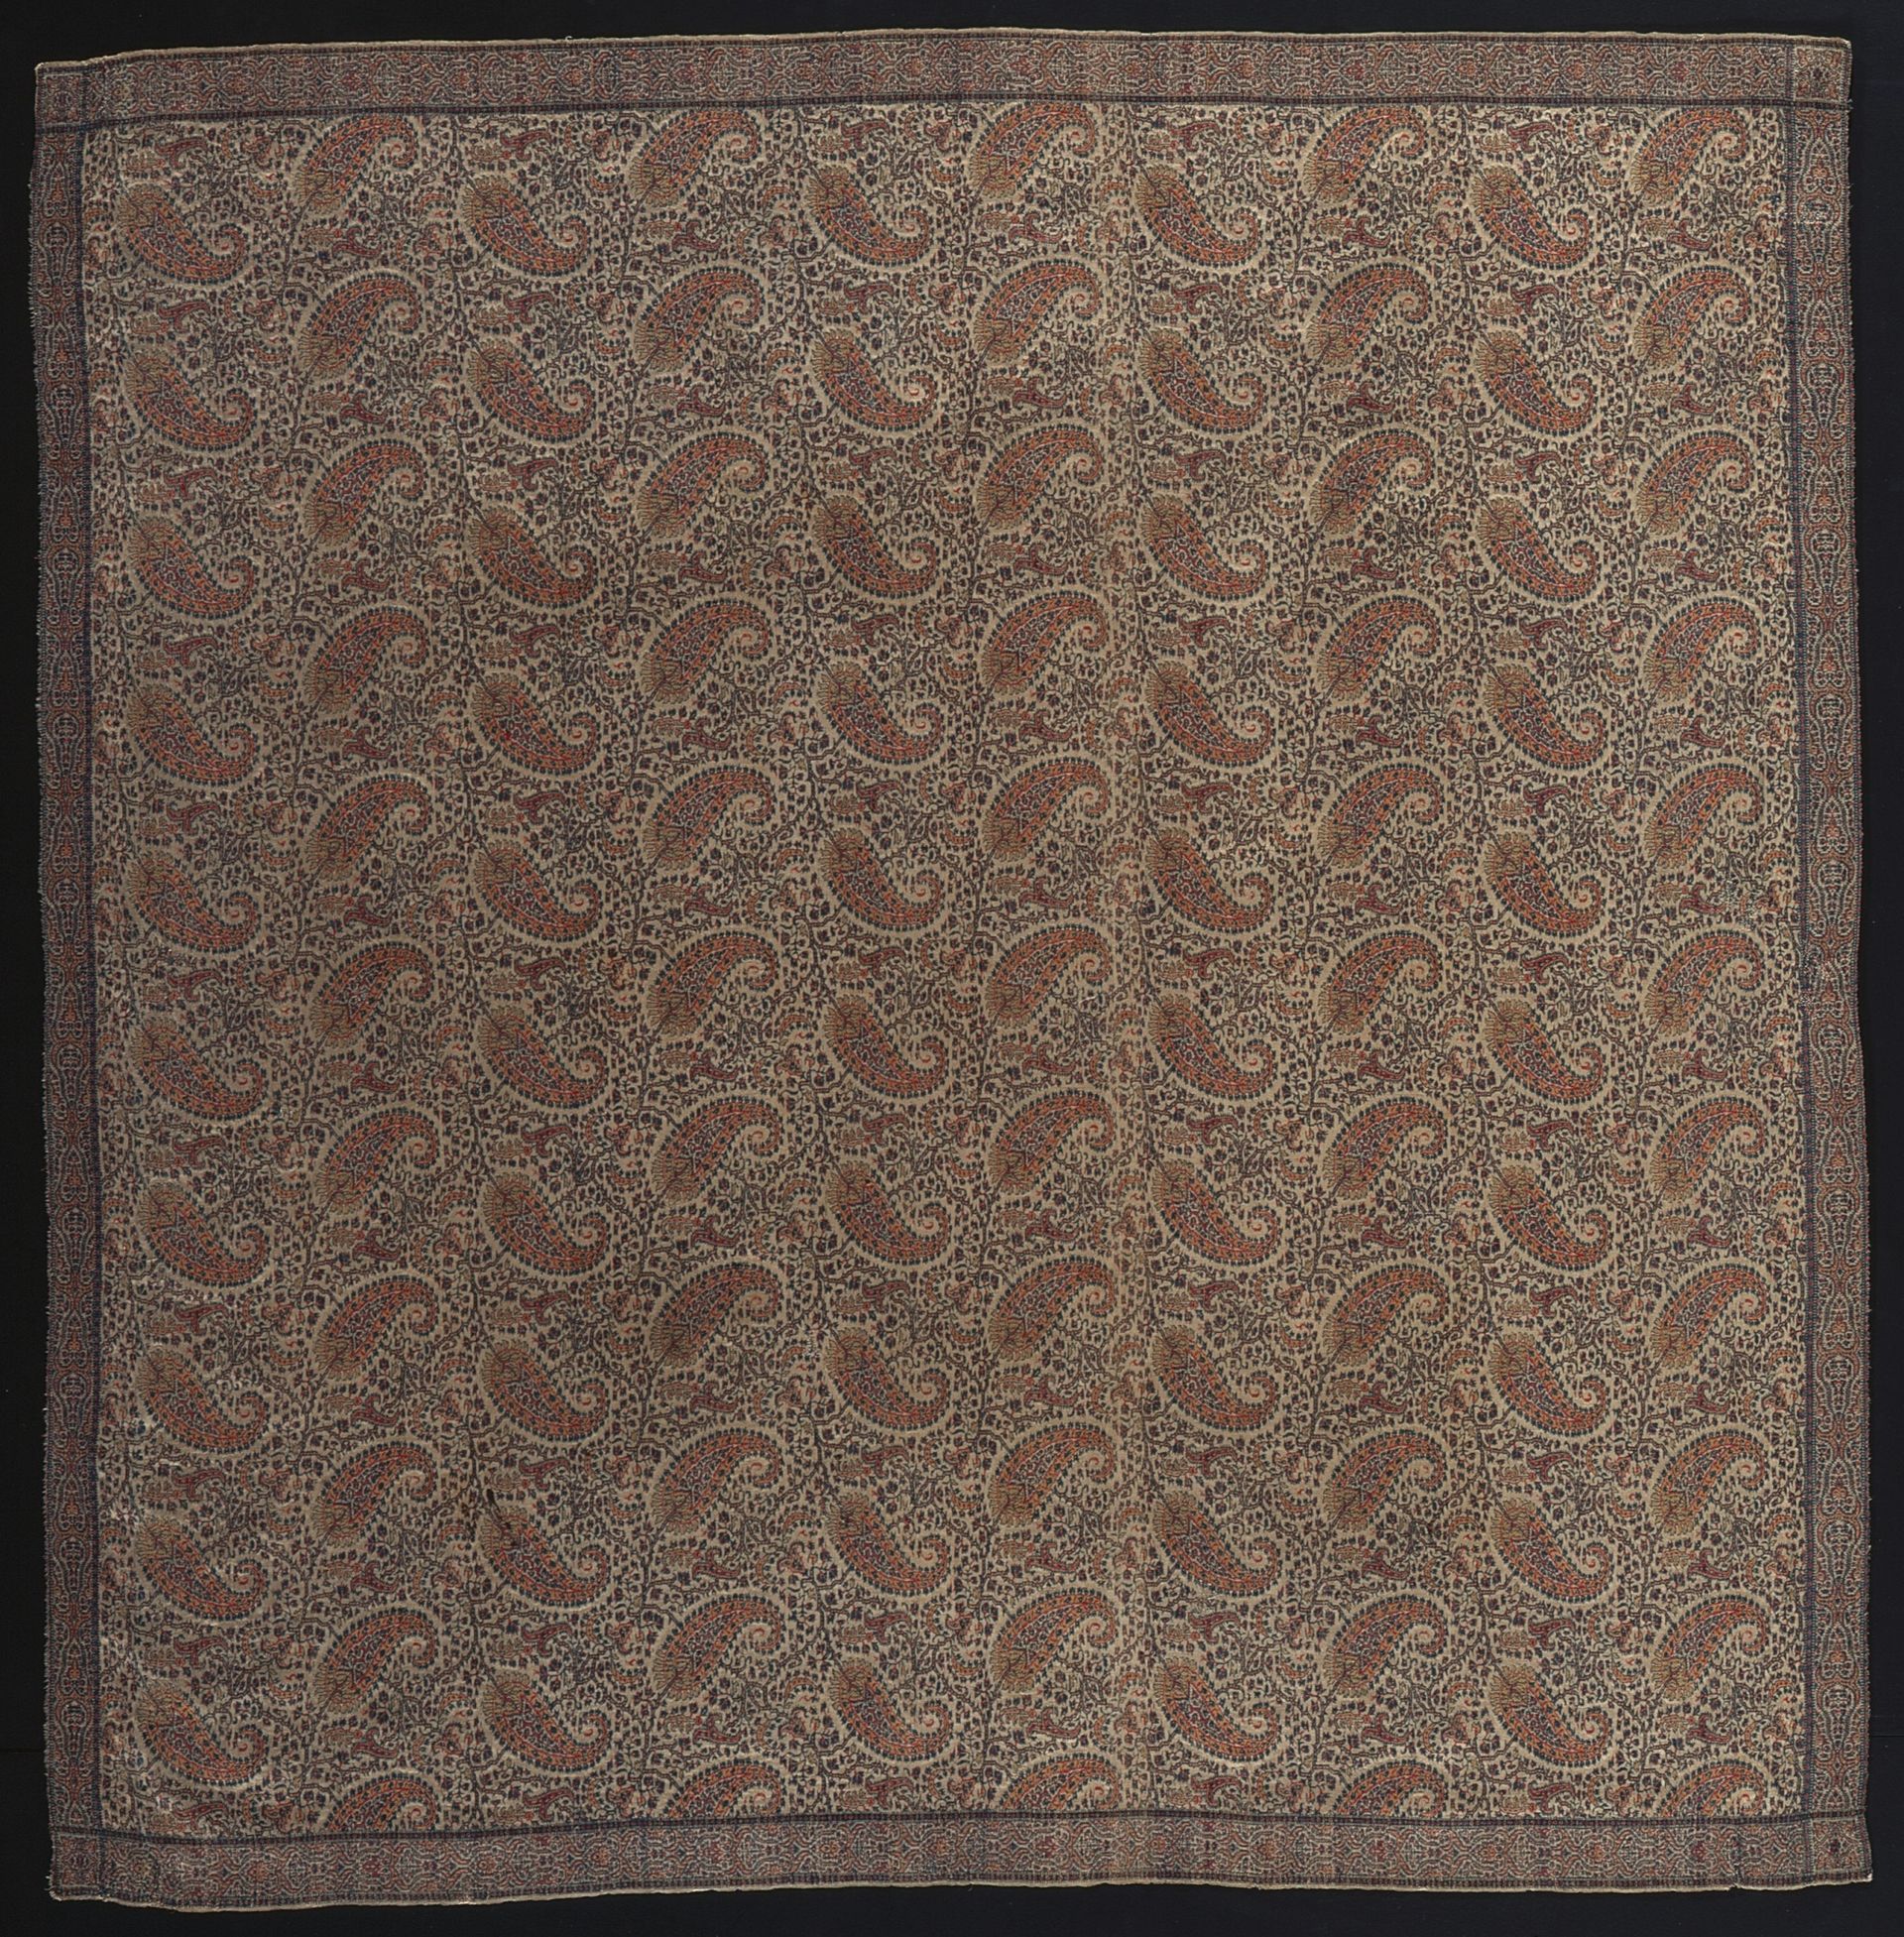 Shawl made in Paisley, Scotland, in imitation of Kashmir shawls, c. 1830